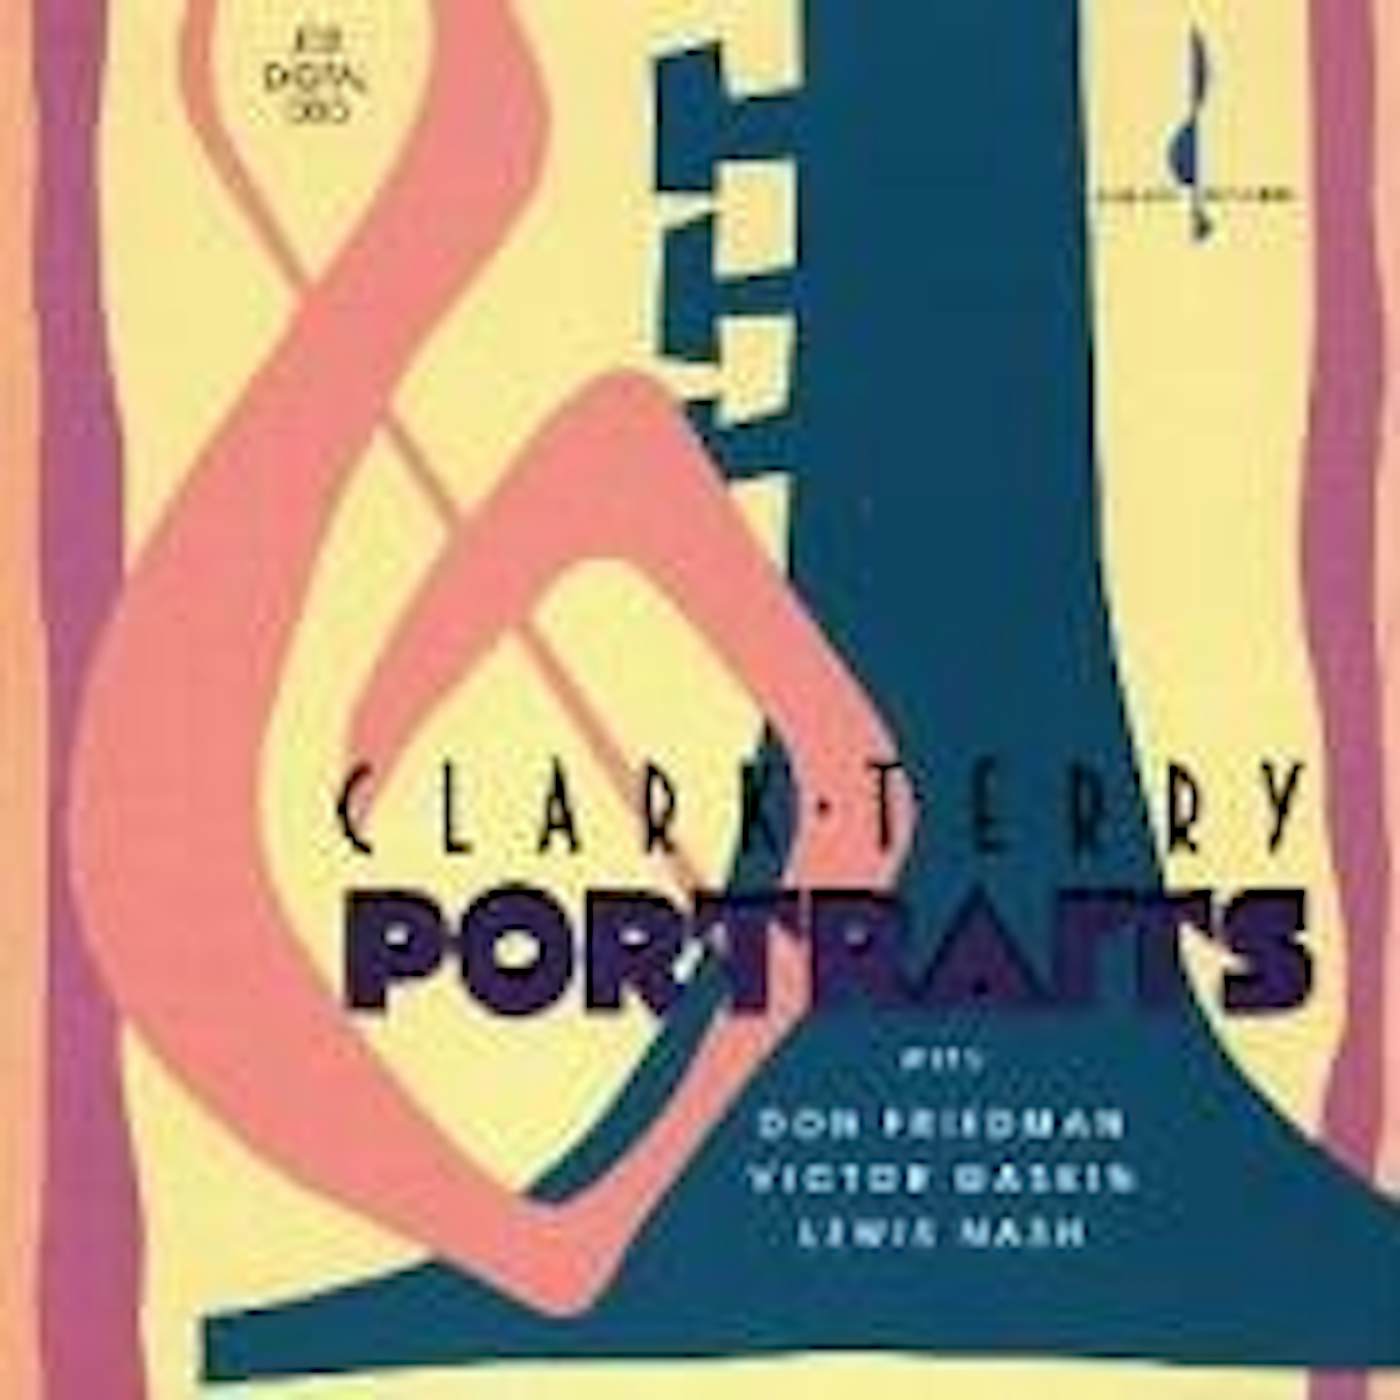 Clark Terry PORTRAITS CD